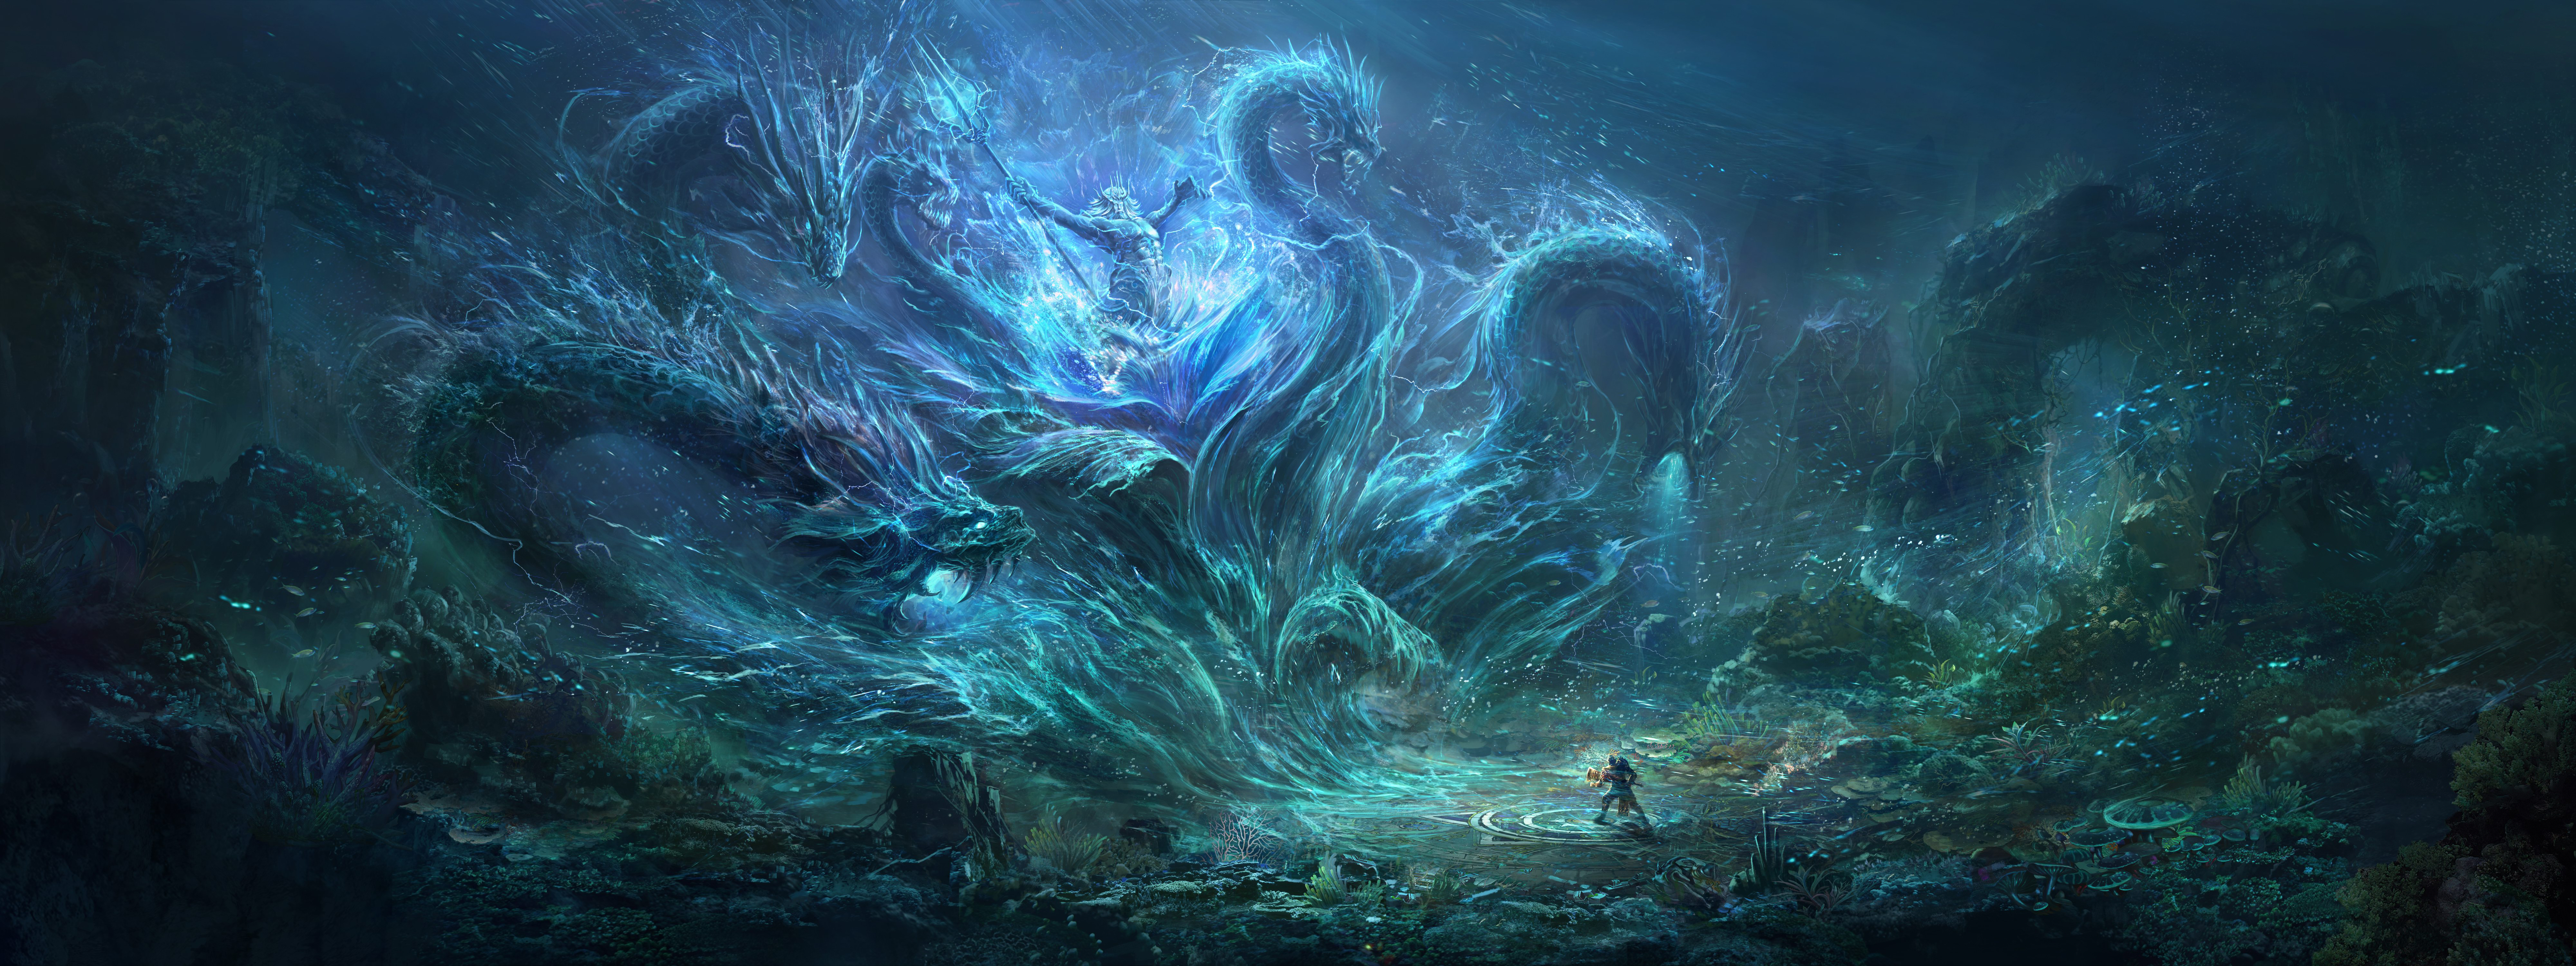 poseidon, hydra, fantasy, gods, sea monster images